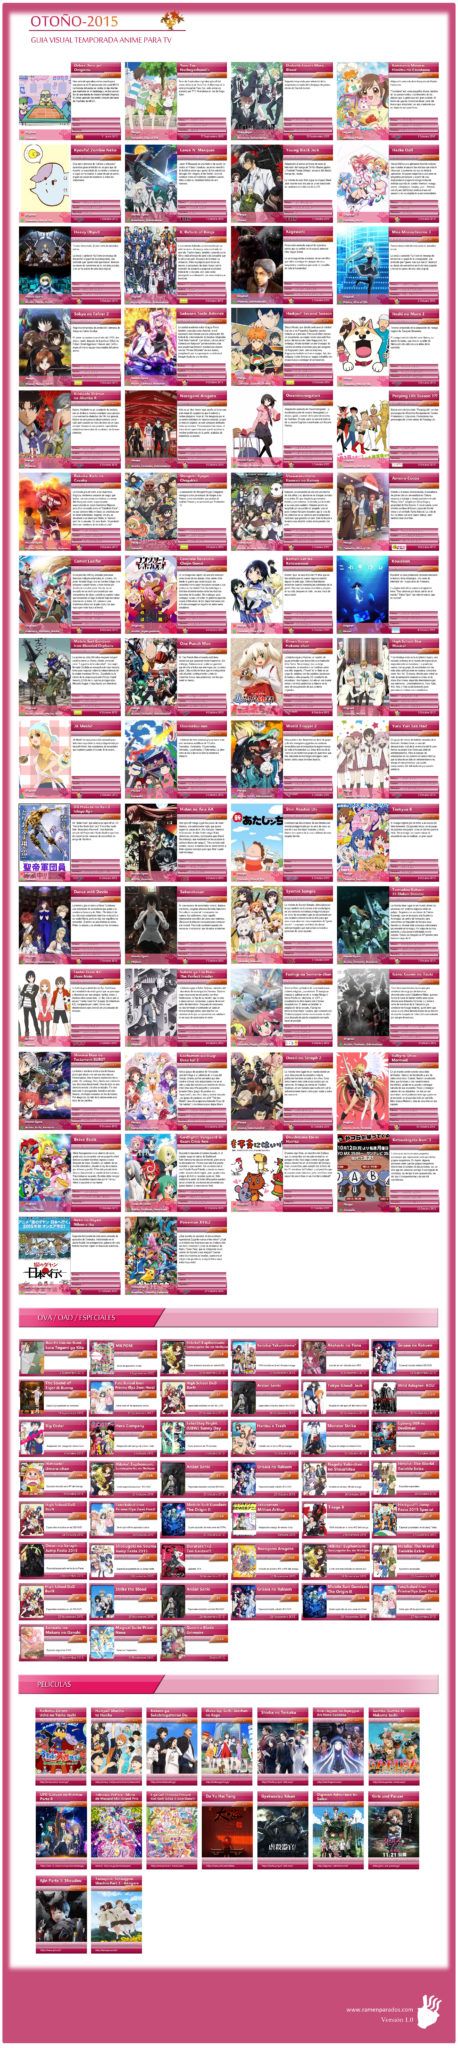 Novedades trimestrales de Anime - Página 3 Guia-Visual-Anime-Oto%C3%B1o-15